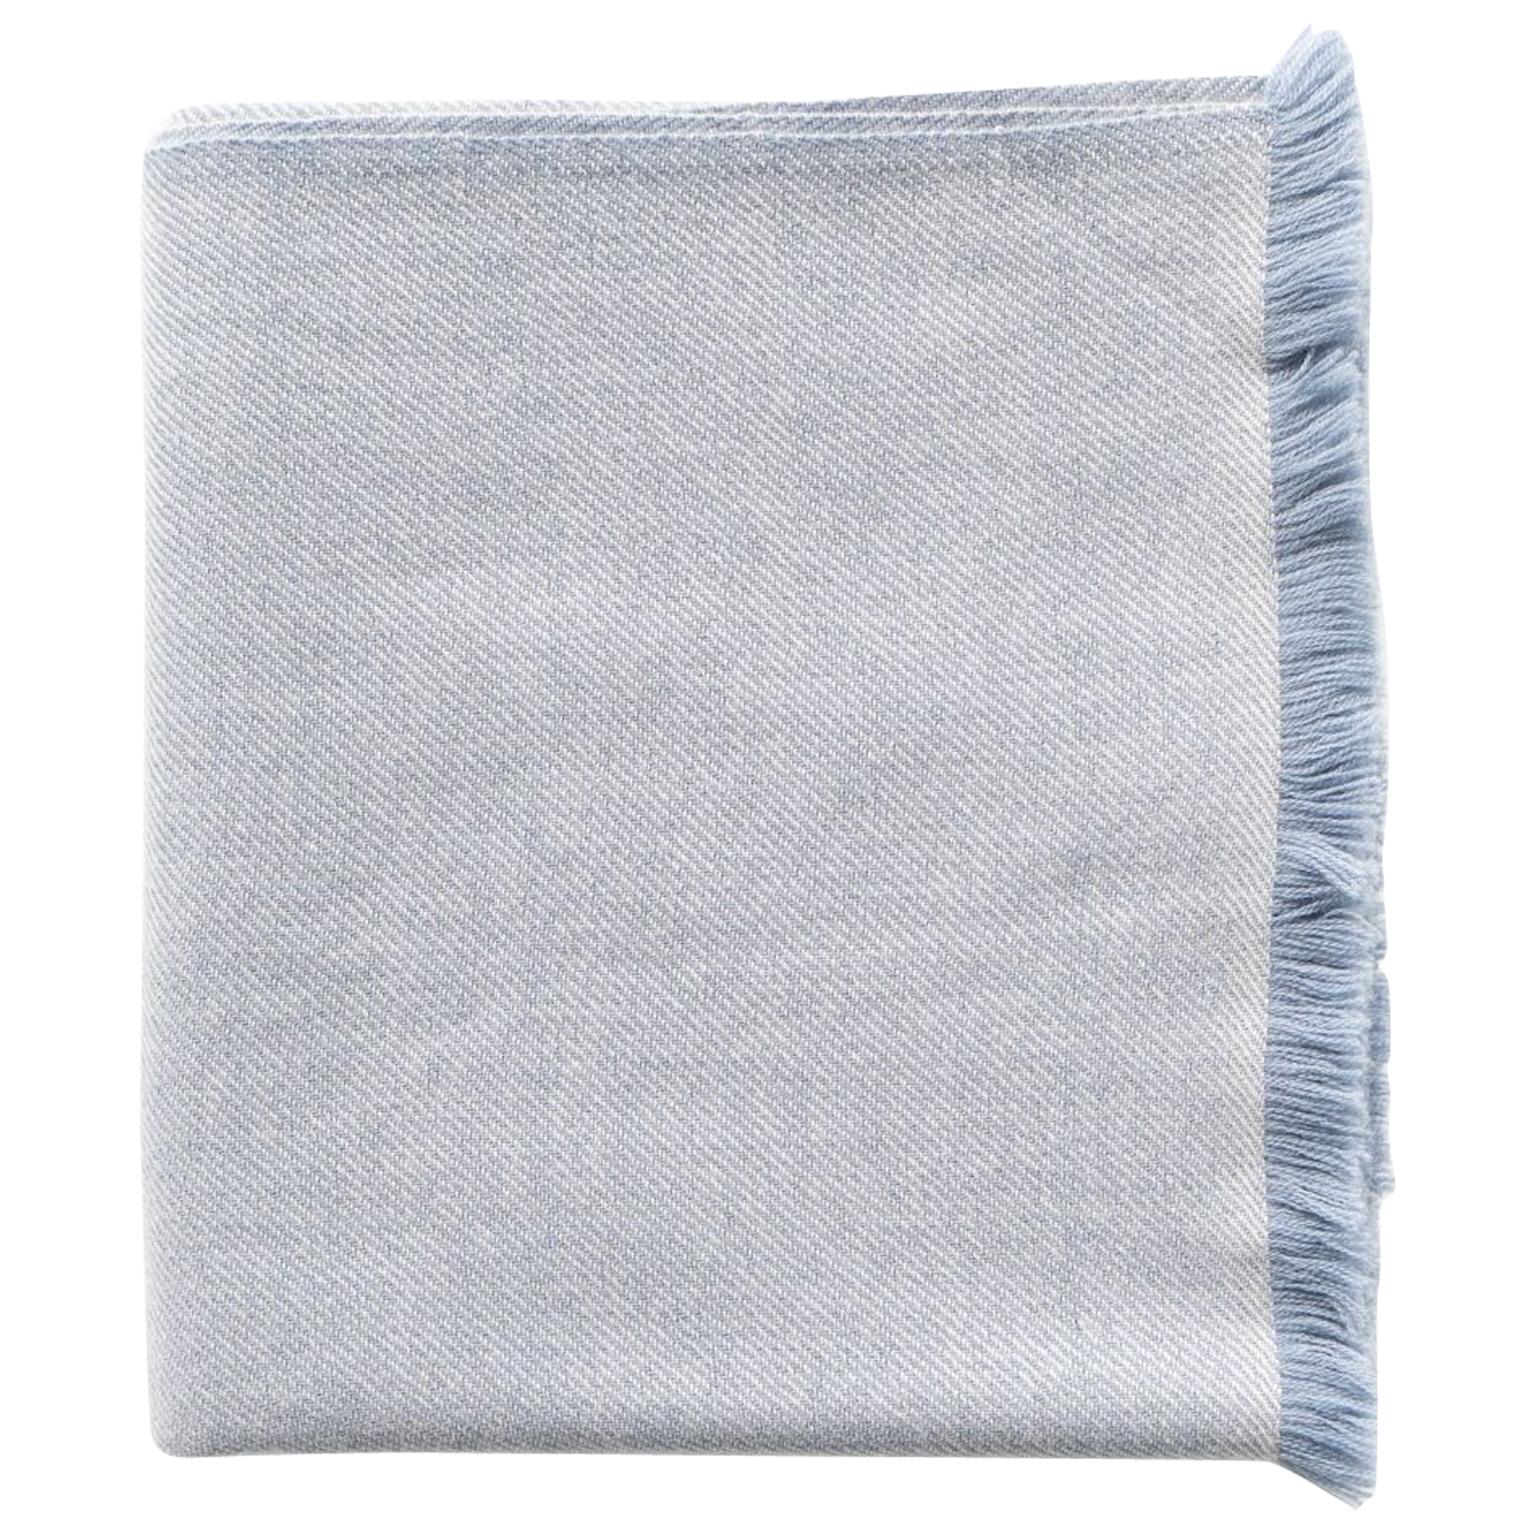 BORO Blue Shade Handloom Throw / Blanket In Pure Soft Merino Twill Weave For Sale